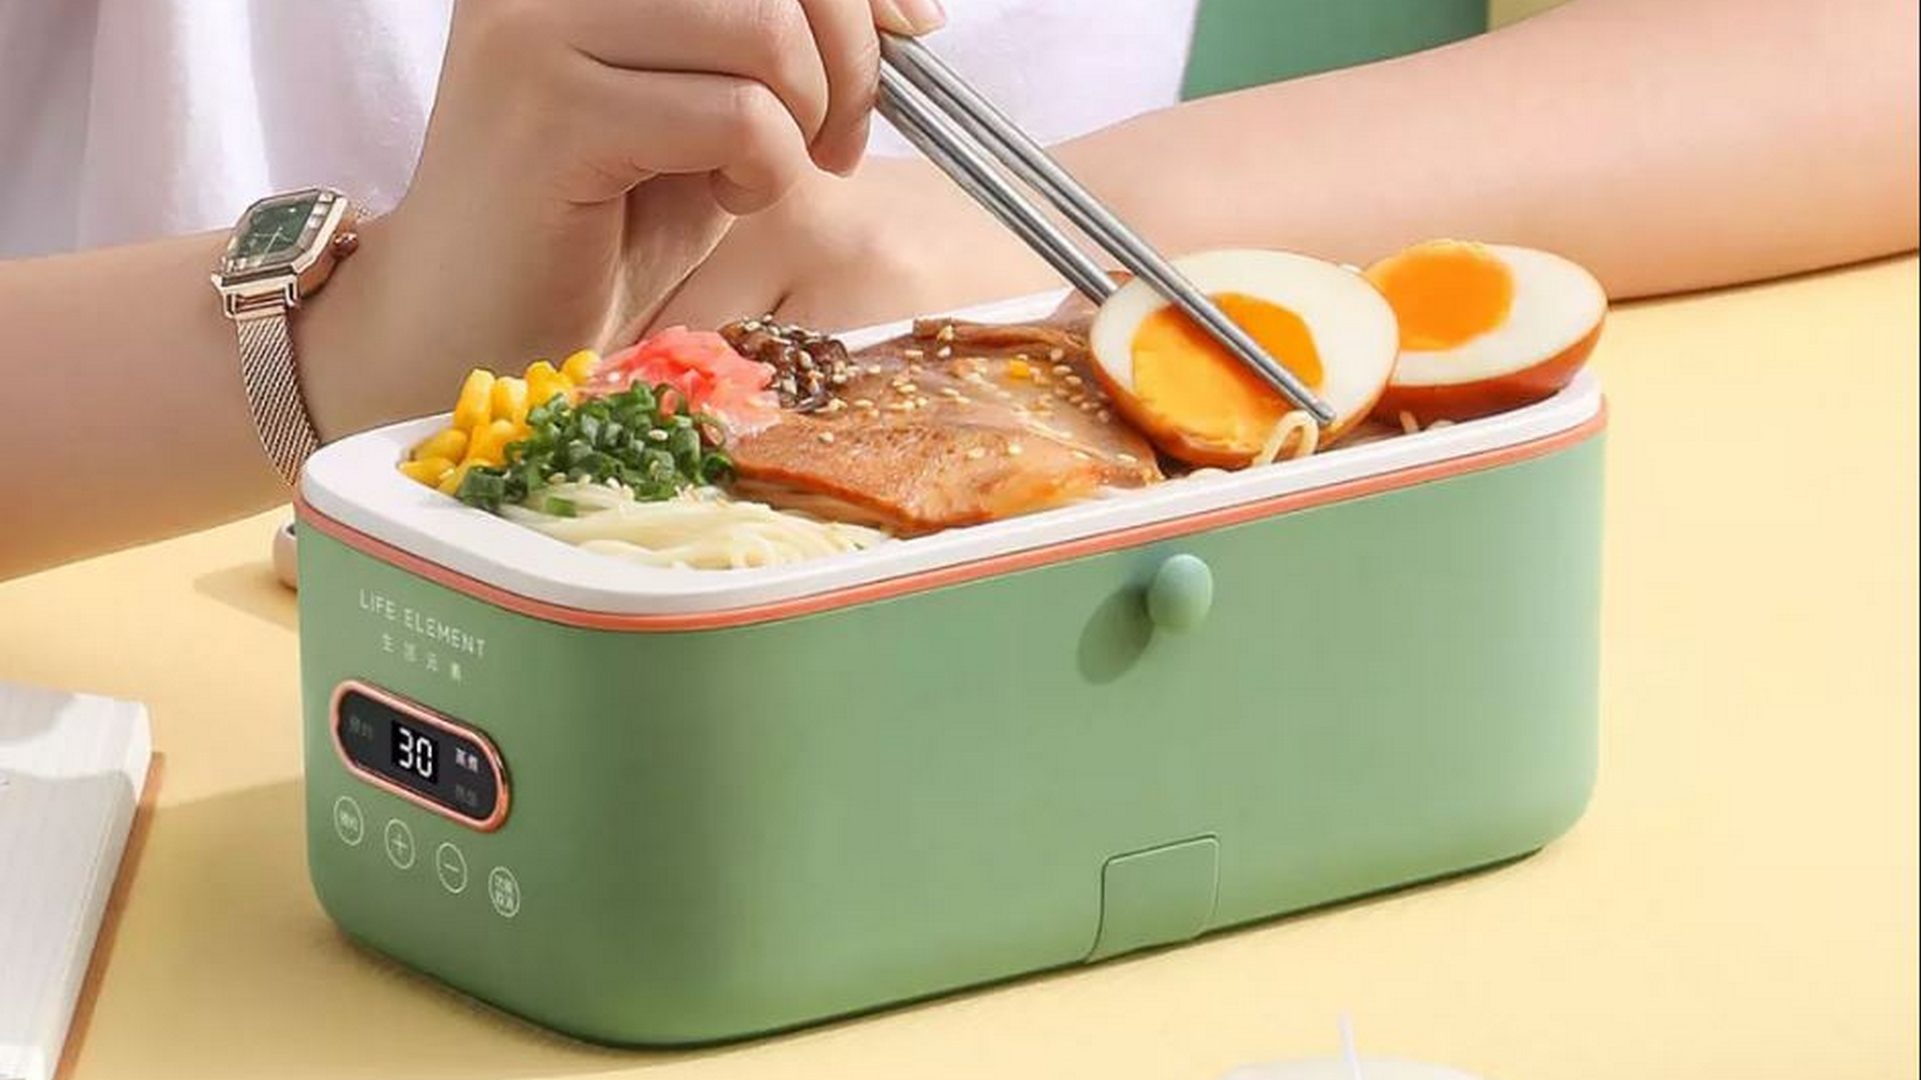 https://gizchina.it/wp-content/uploads/2020/09/xiaomi-youpin-lunch-box-scaldavivande-smart-life-element-prezzo.jpg